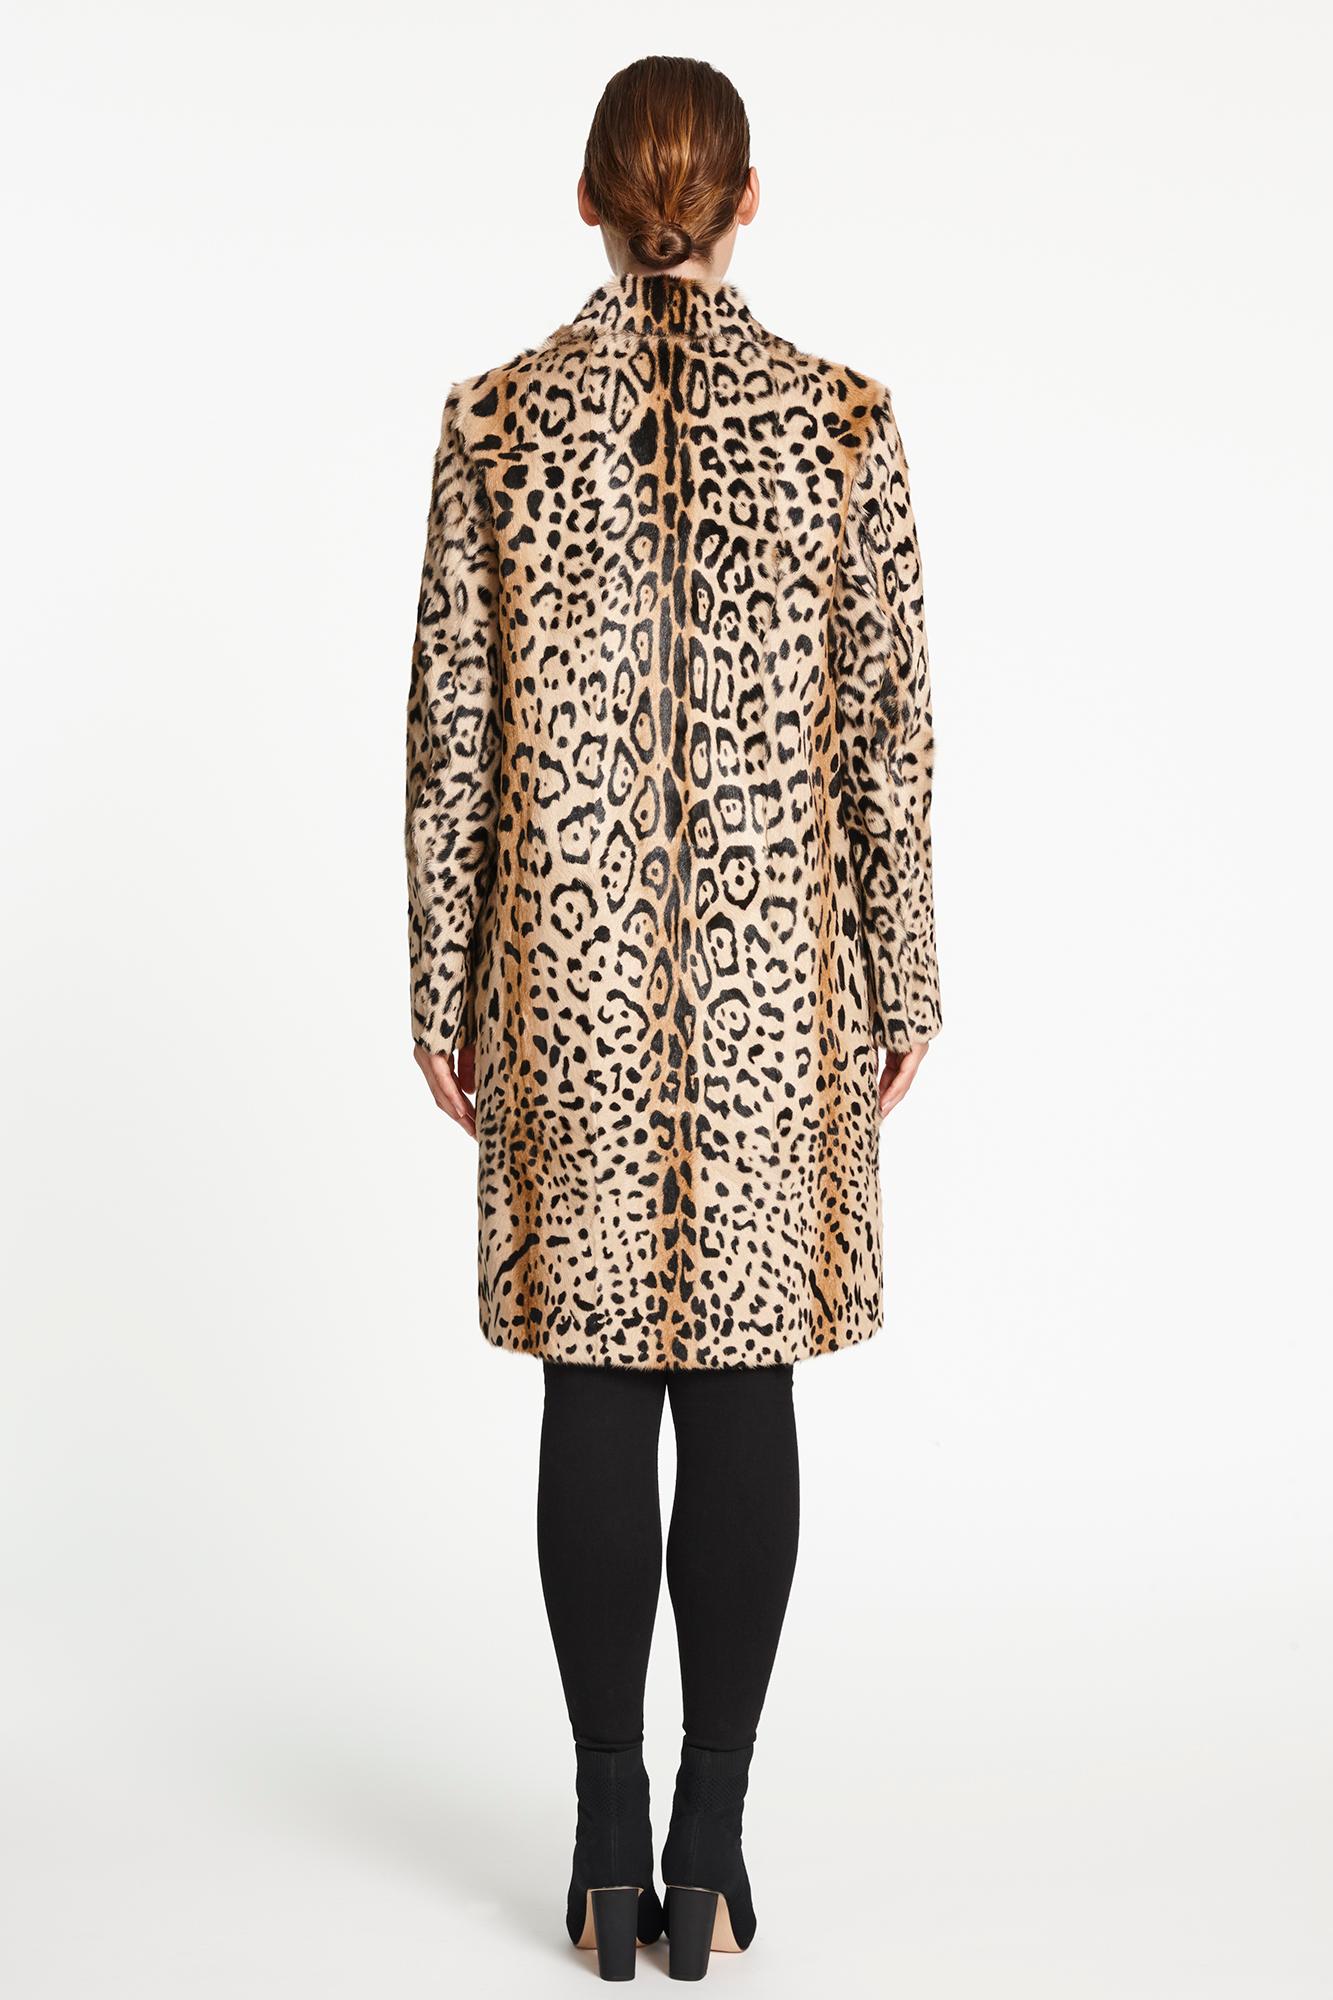 Verheyen London Leopard Print Coat in Red Ruby Goat Hair Fur UK 12 - Brand New  6